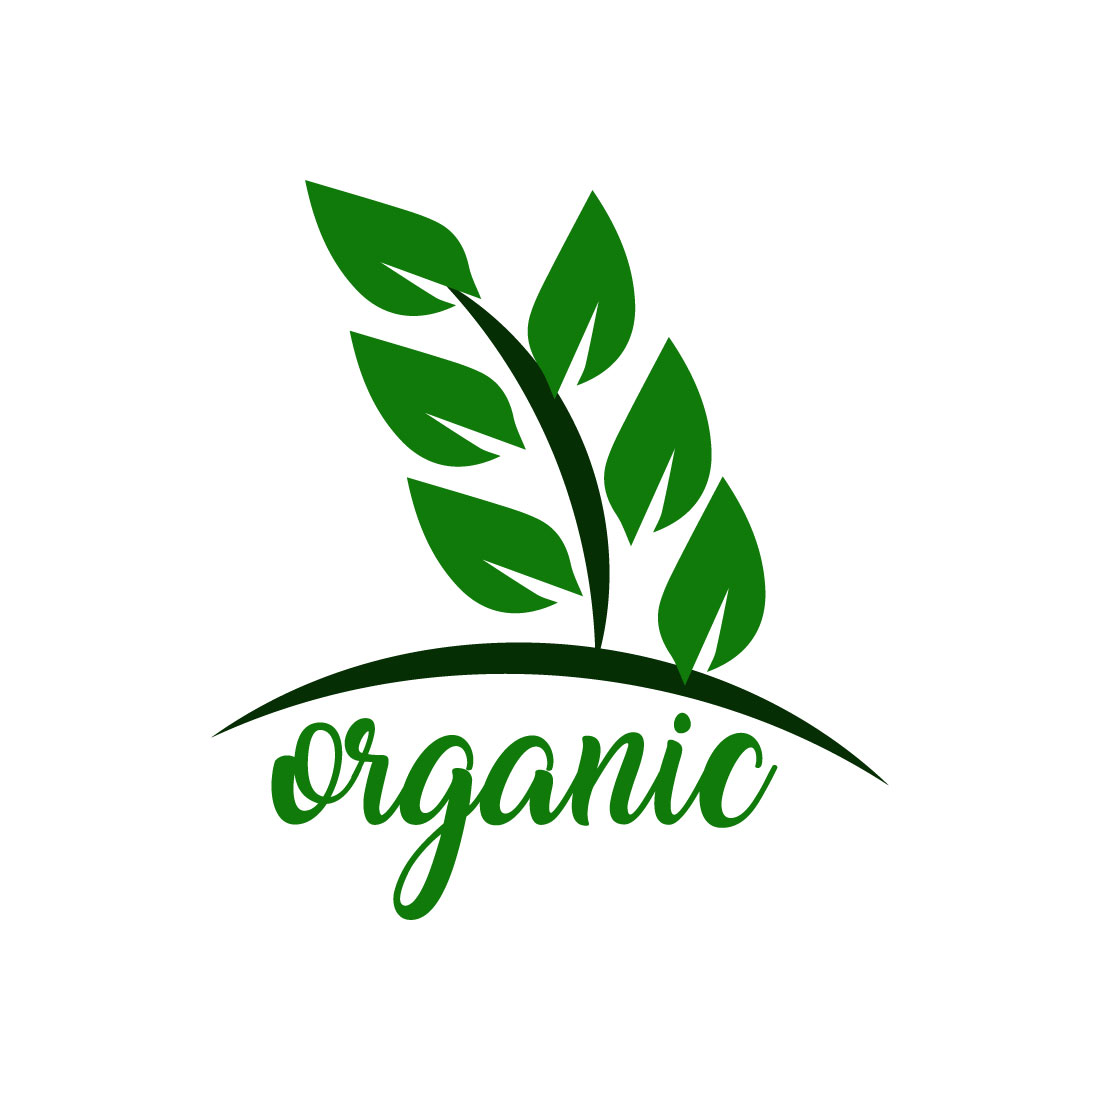 Free Earth-friendly organic logo cover image.